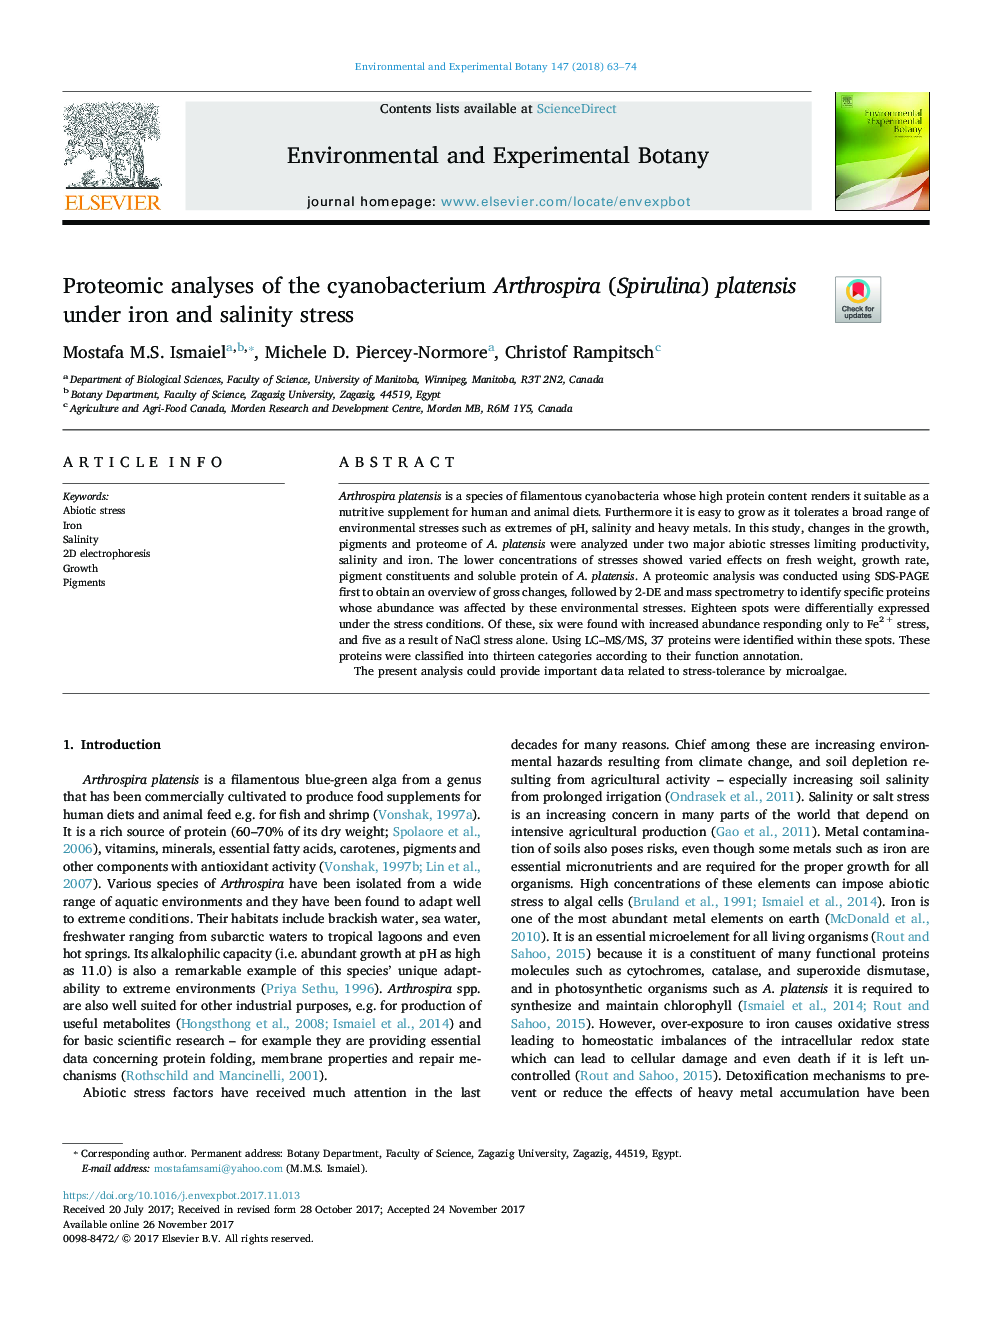 Proteomic analyses of the cyanobacterium Arthrospira (Spirulina) platensis under iron and salinity stress